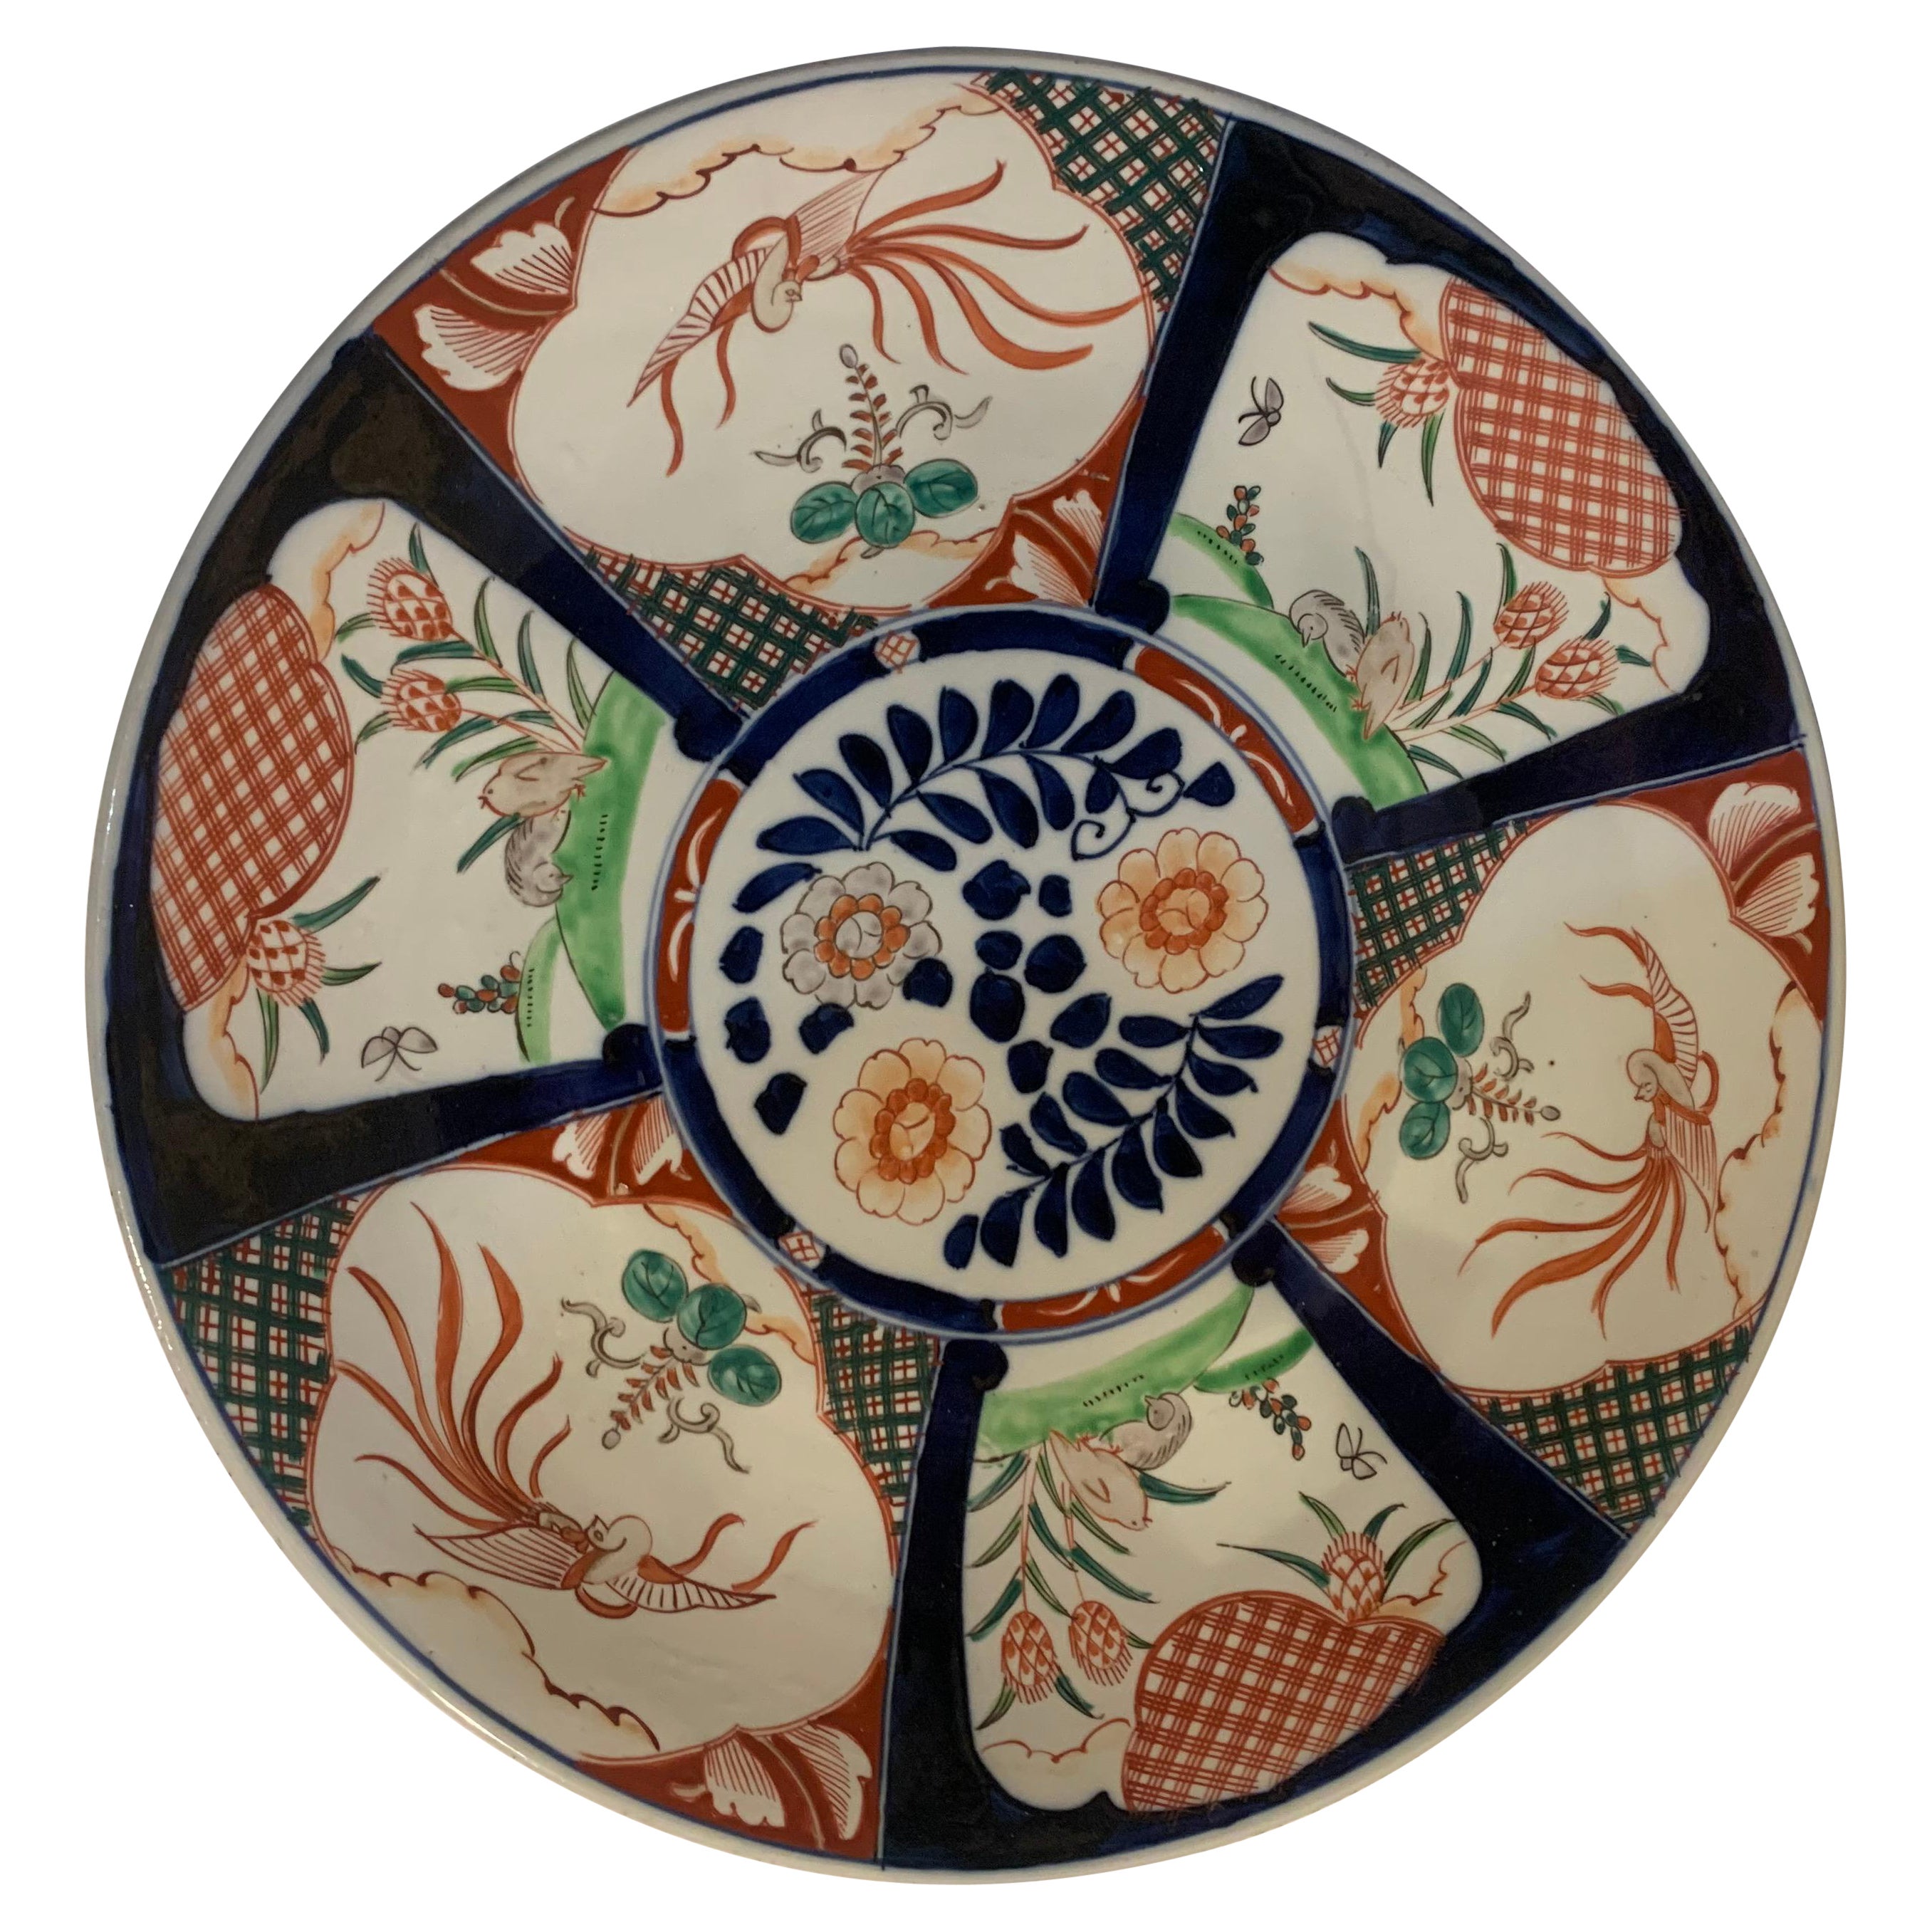 Stunning Antique 19th Century Japanese "Imari" Porcelain Plate For Sale